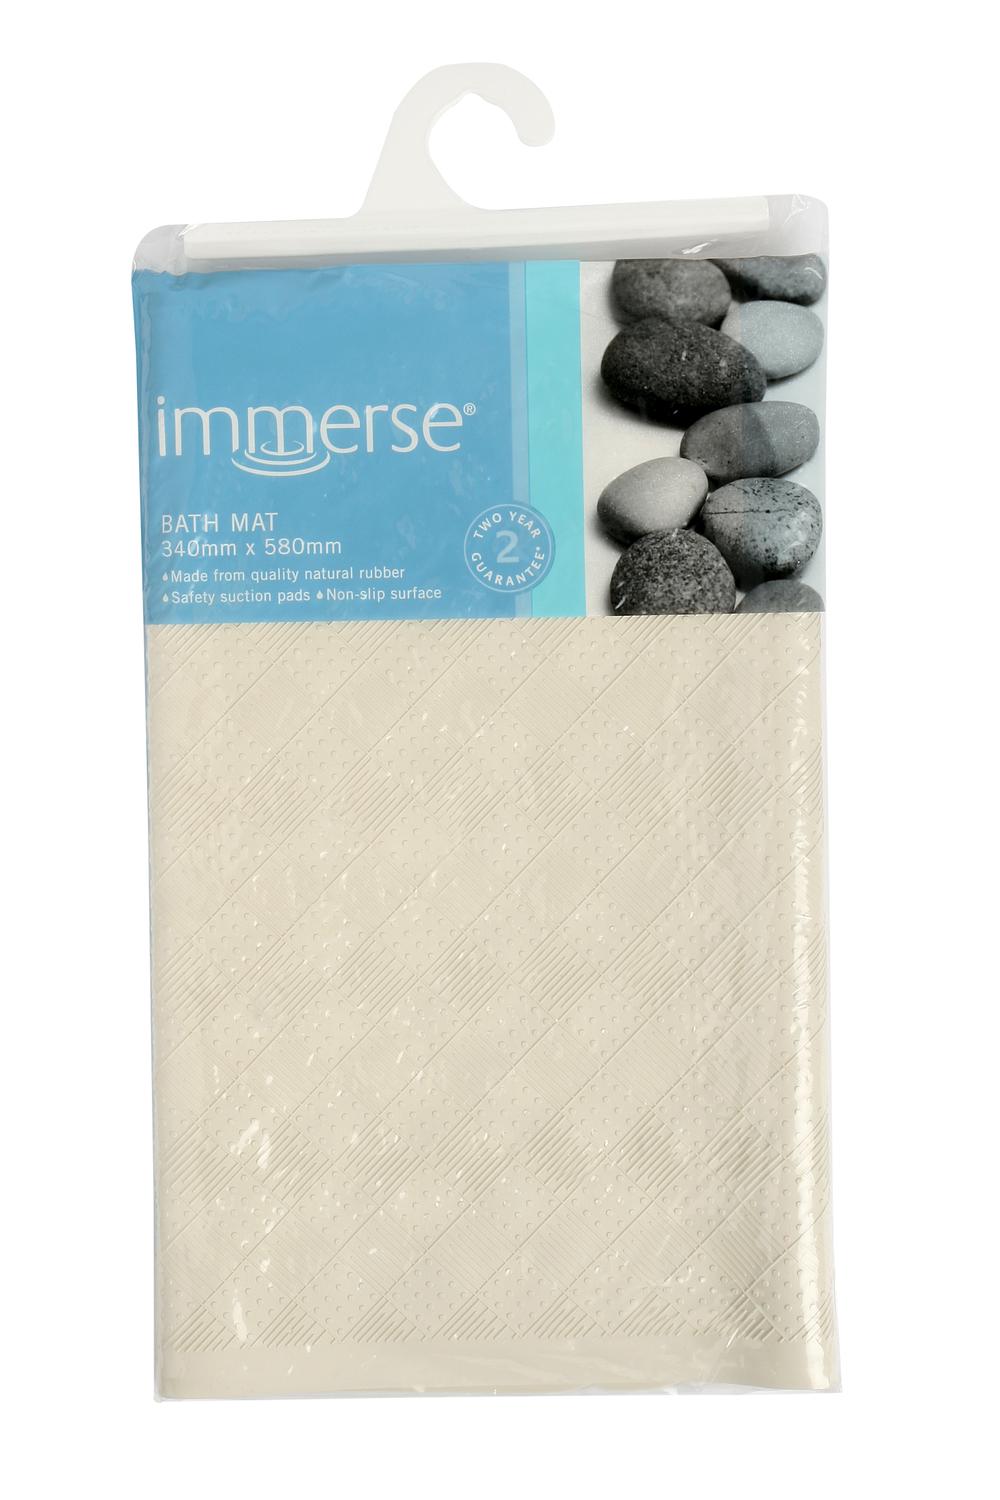 Immerse Bathroom Rubber Bathmat (White) - 340 x 580mm | Buy online at ...